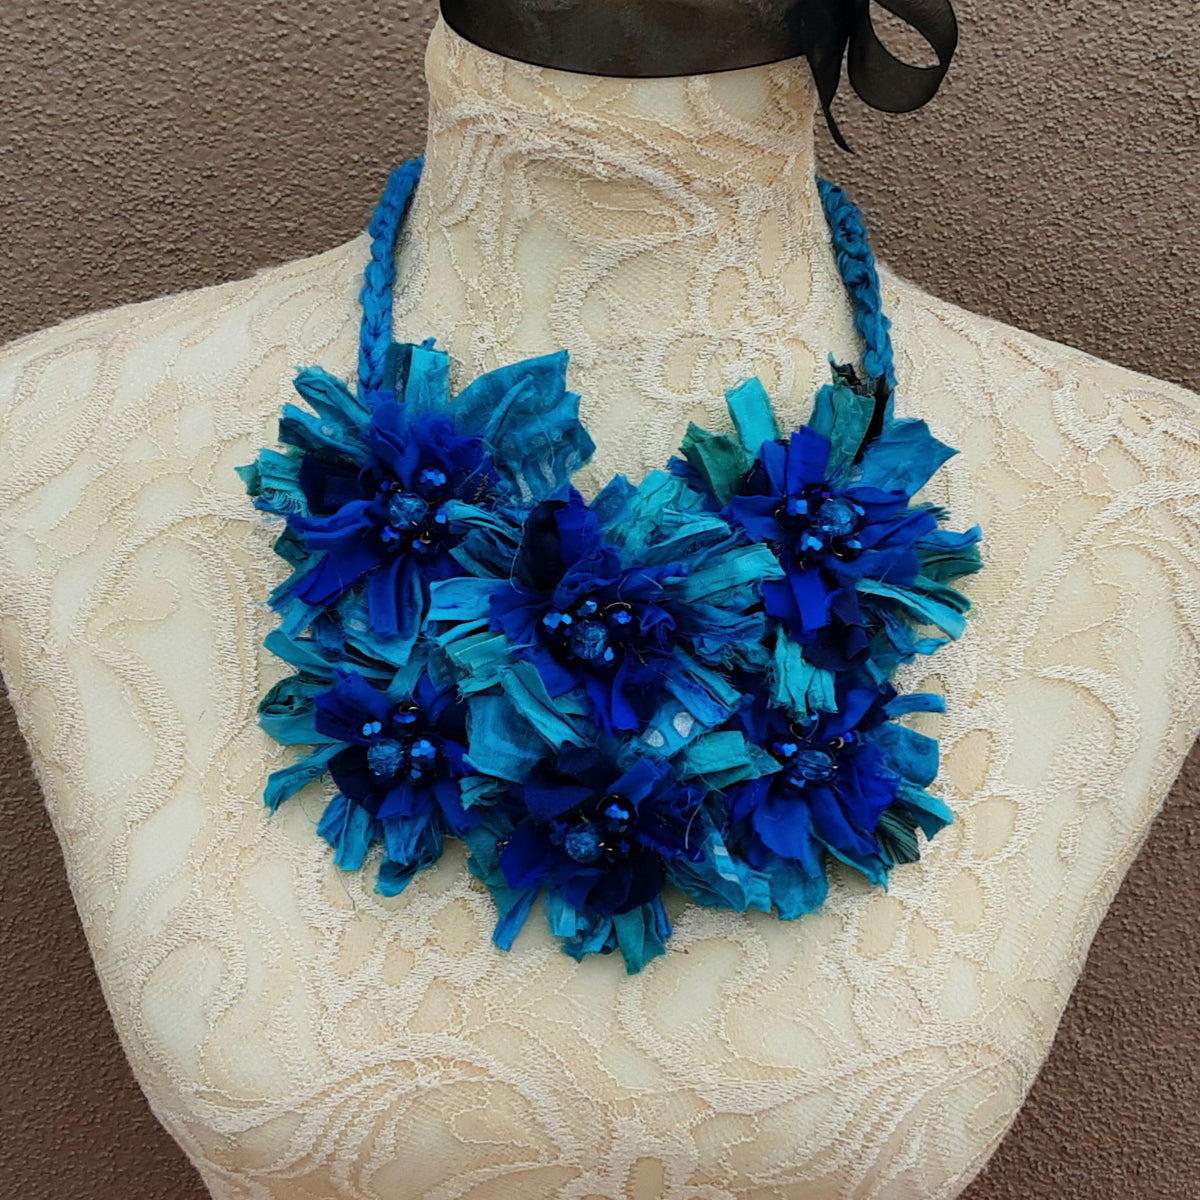 Turquoise Flower Fiber Statement Necklace, Unique Colorful Boho Sari Ribbon Collar